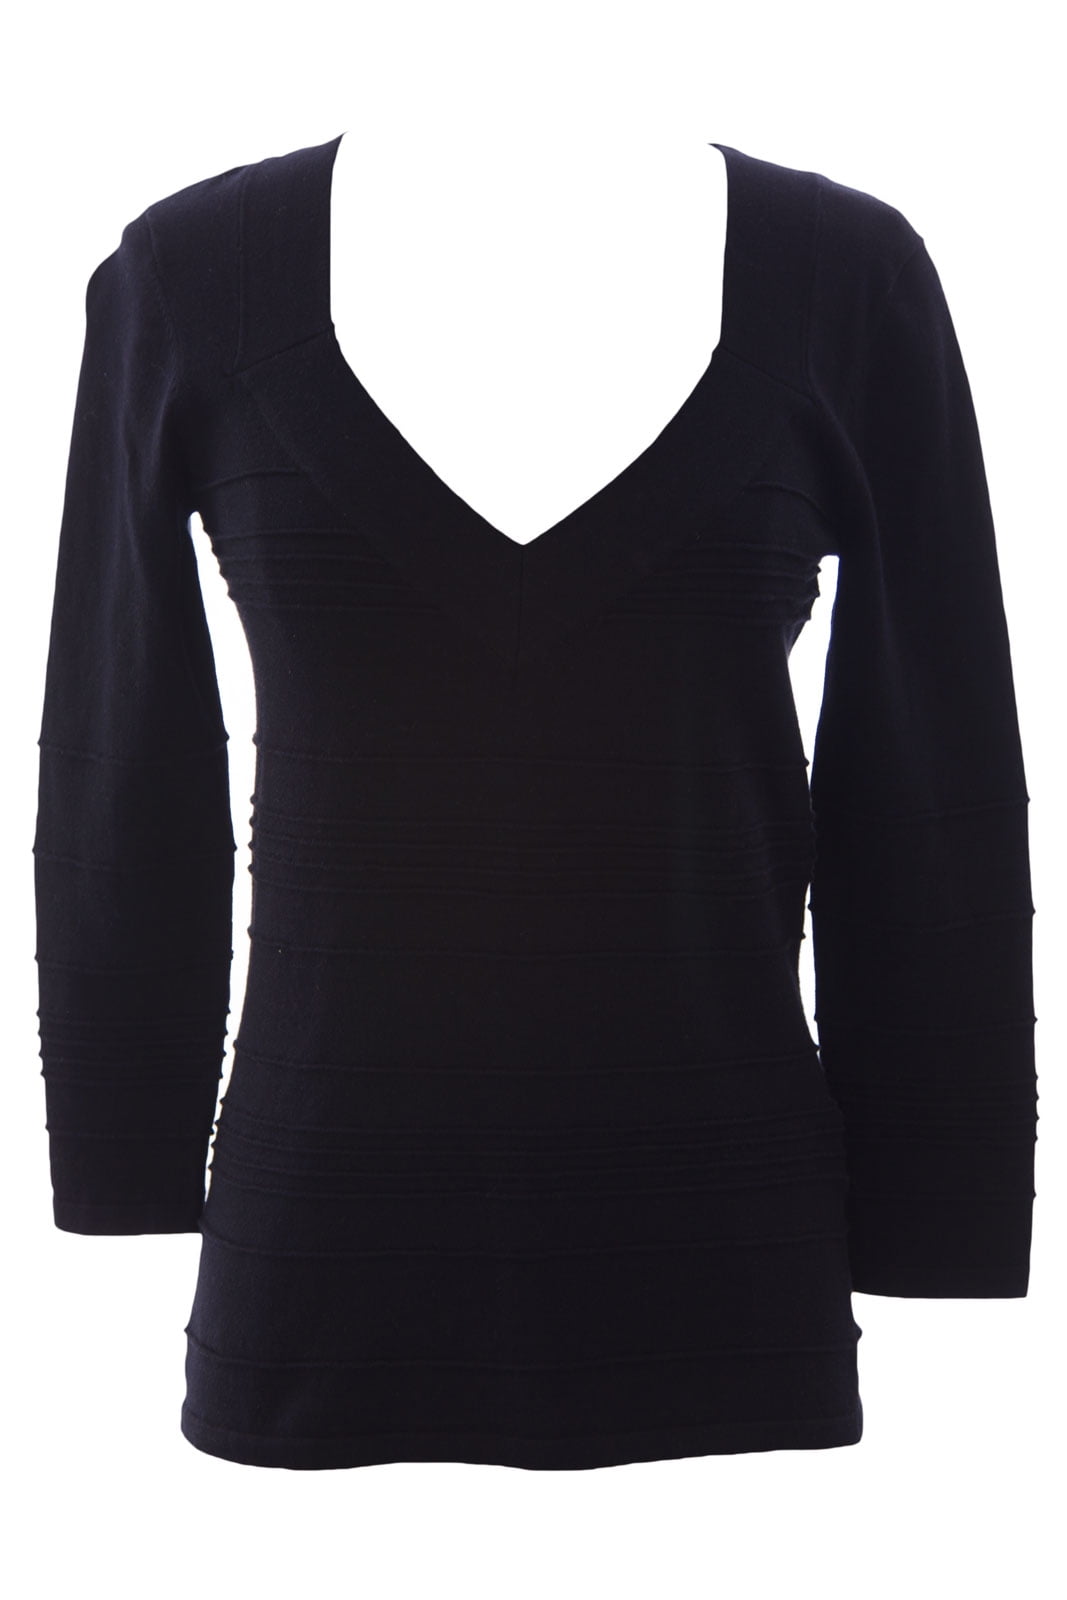 August Silk Women's Squared V-Neck Ribbed Sweater Medium Black ...